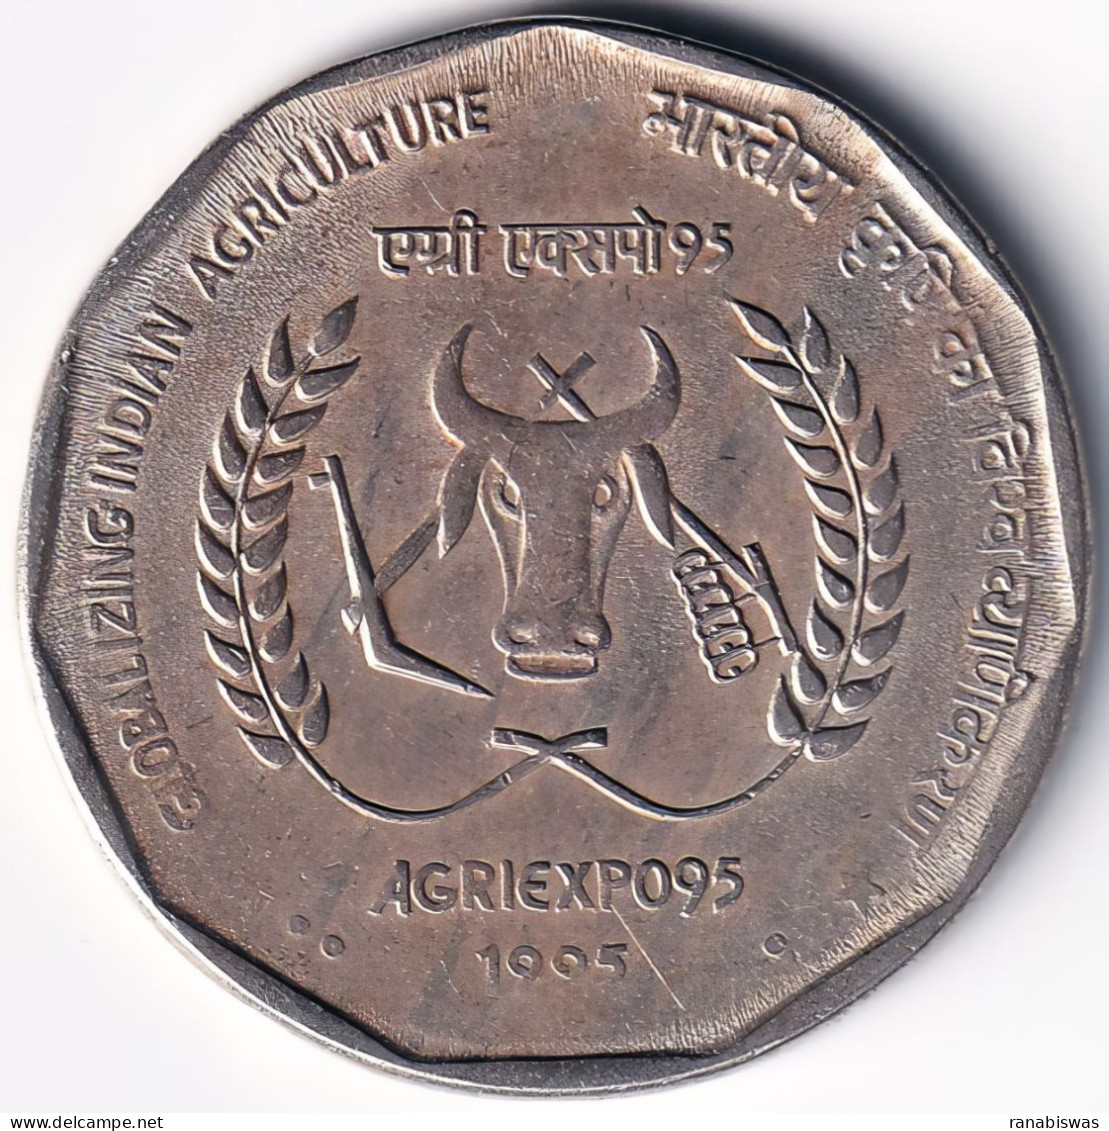 INDIA COIN LOT 125, 2 RUPEES 1995, AGRI EXPO, CALCUTTA MINT, XF, RARE - Inde